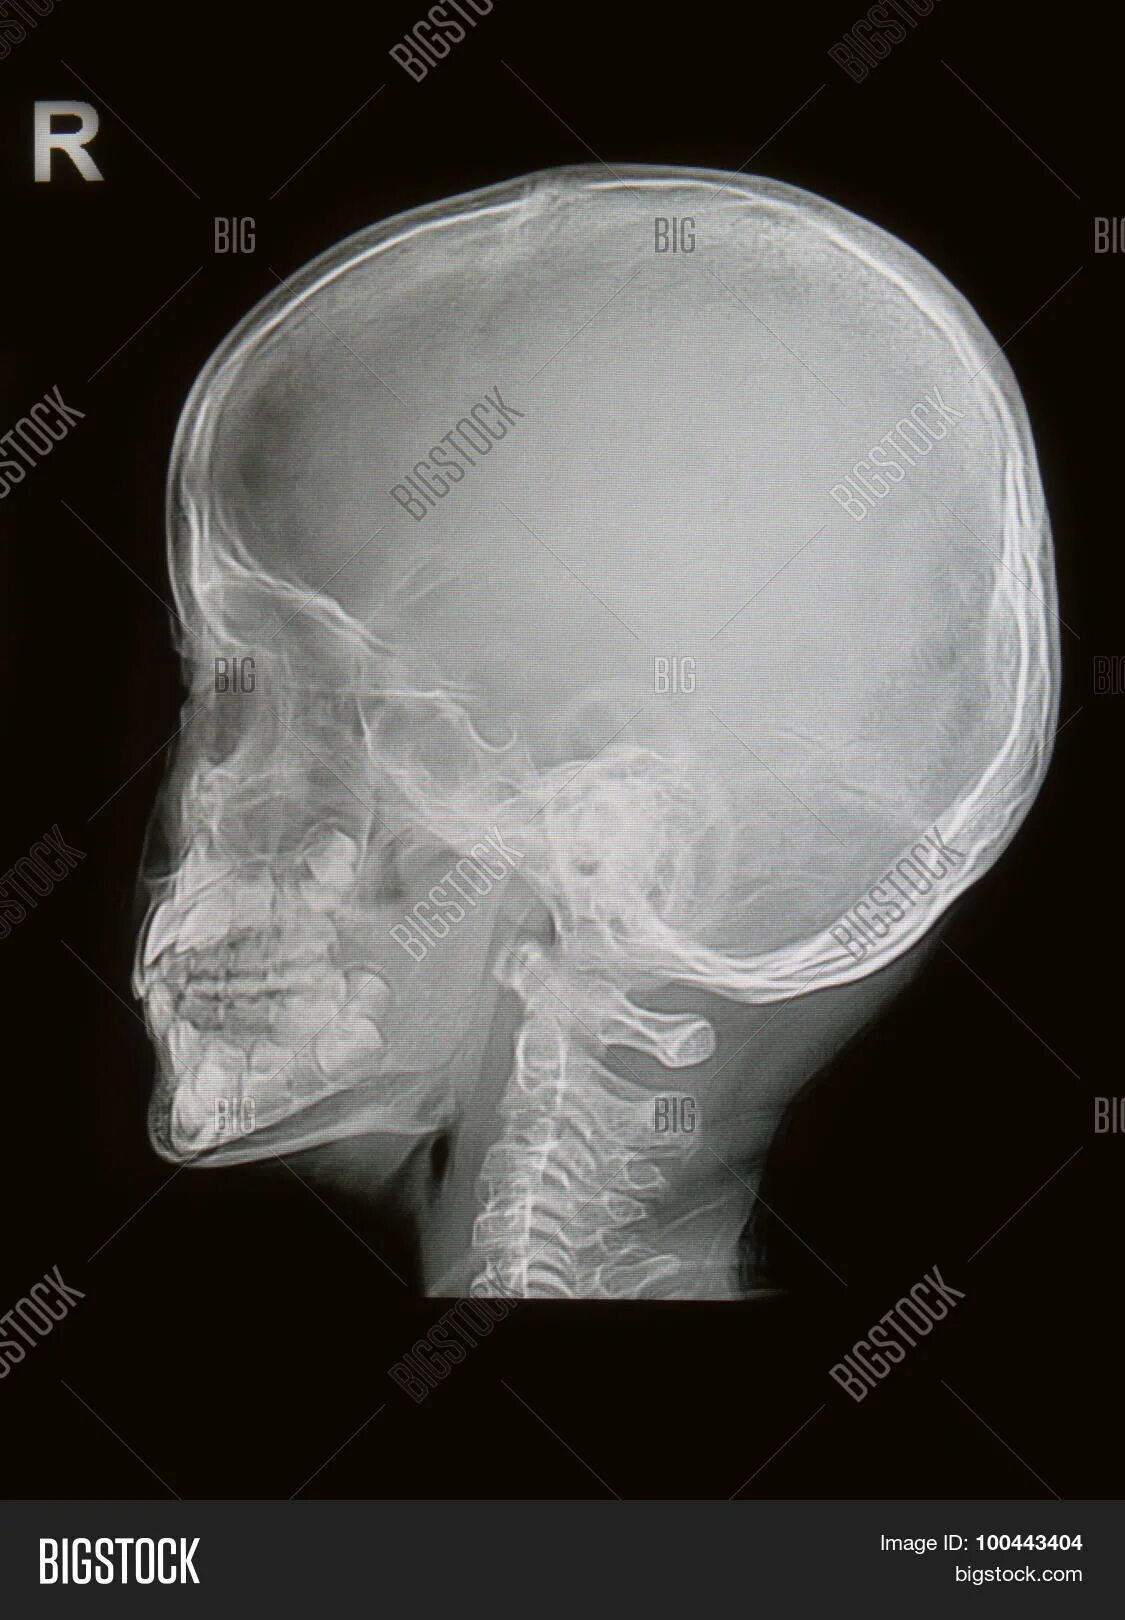 Снимок черепа новорождённого. Рентген черепа новорожденного.